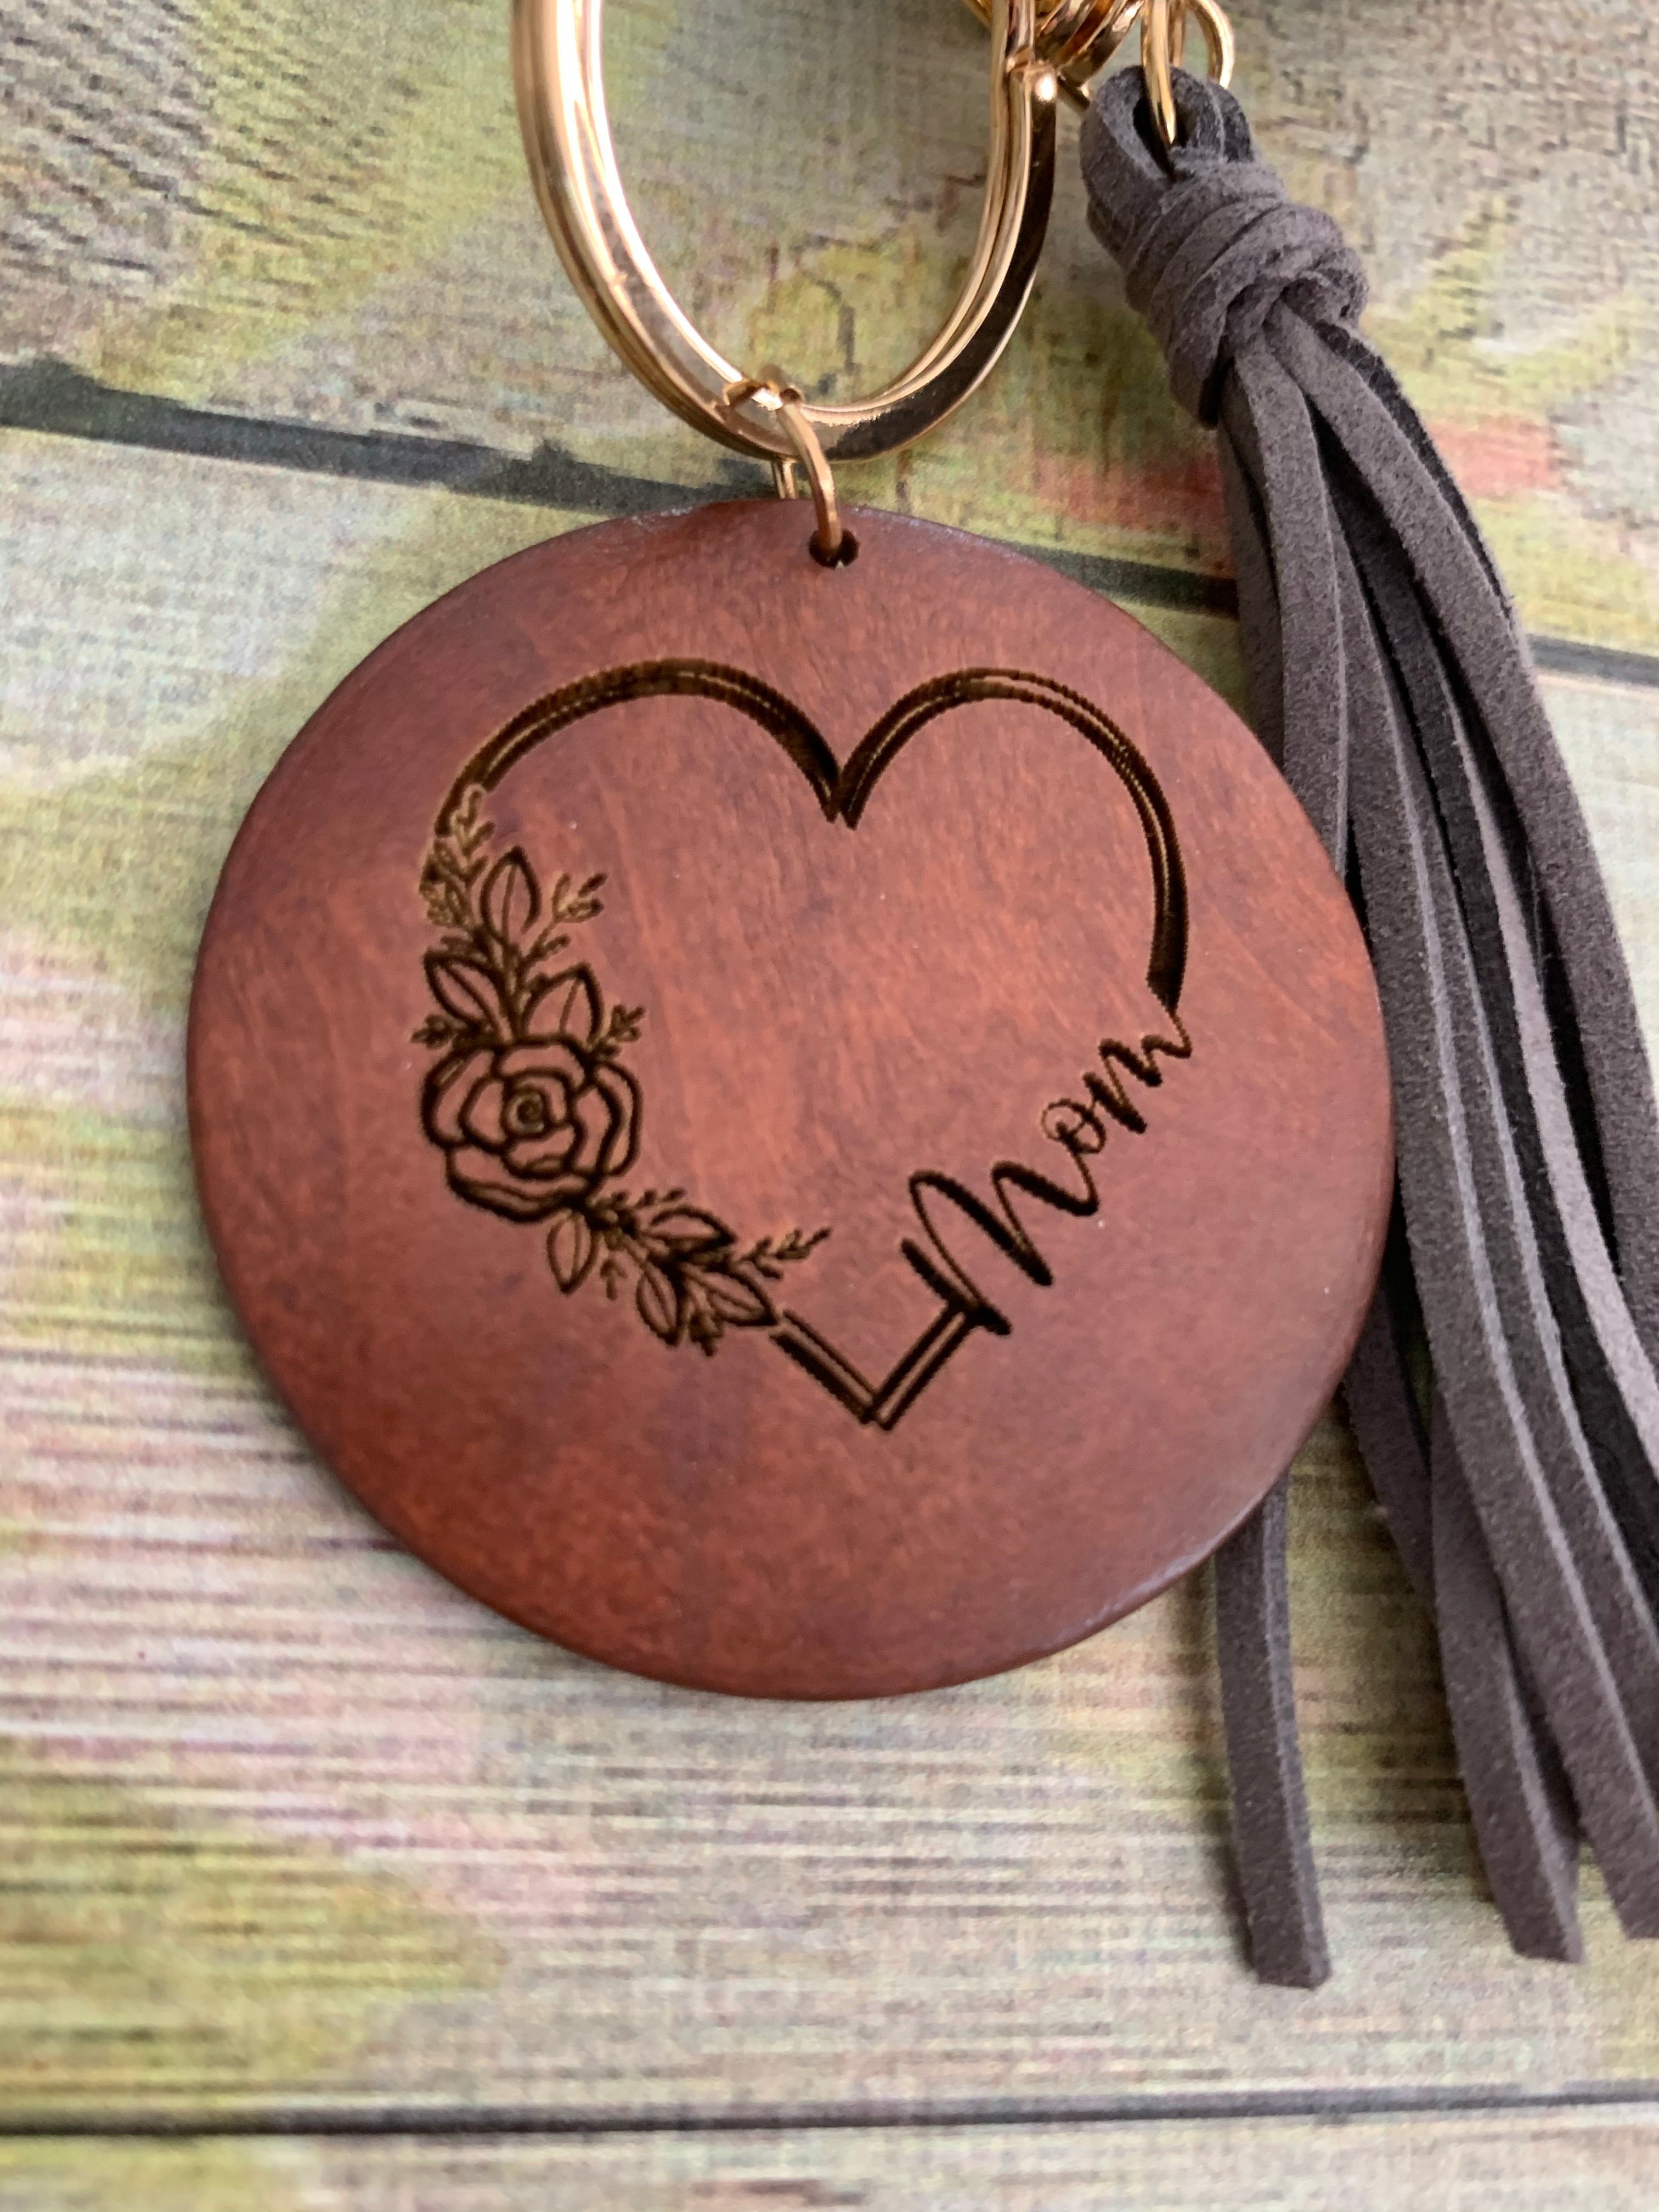 Mom Doodle Heart Bangle Bracelet Keychain